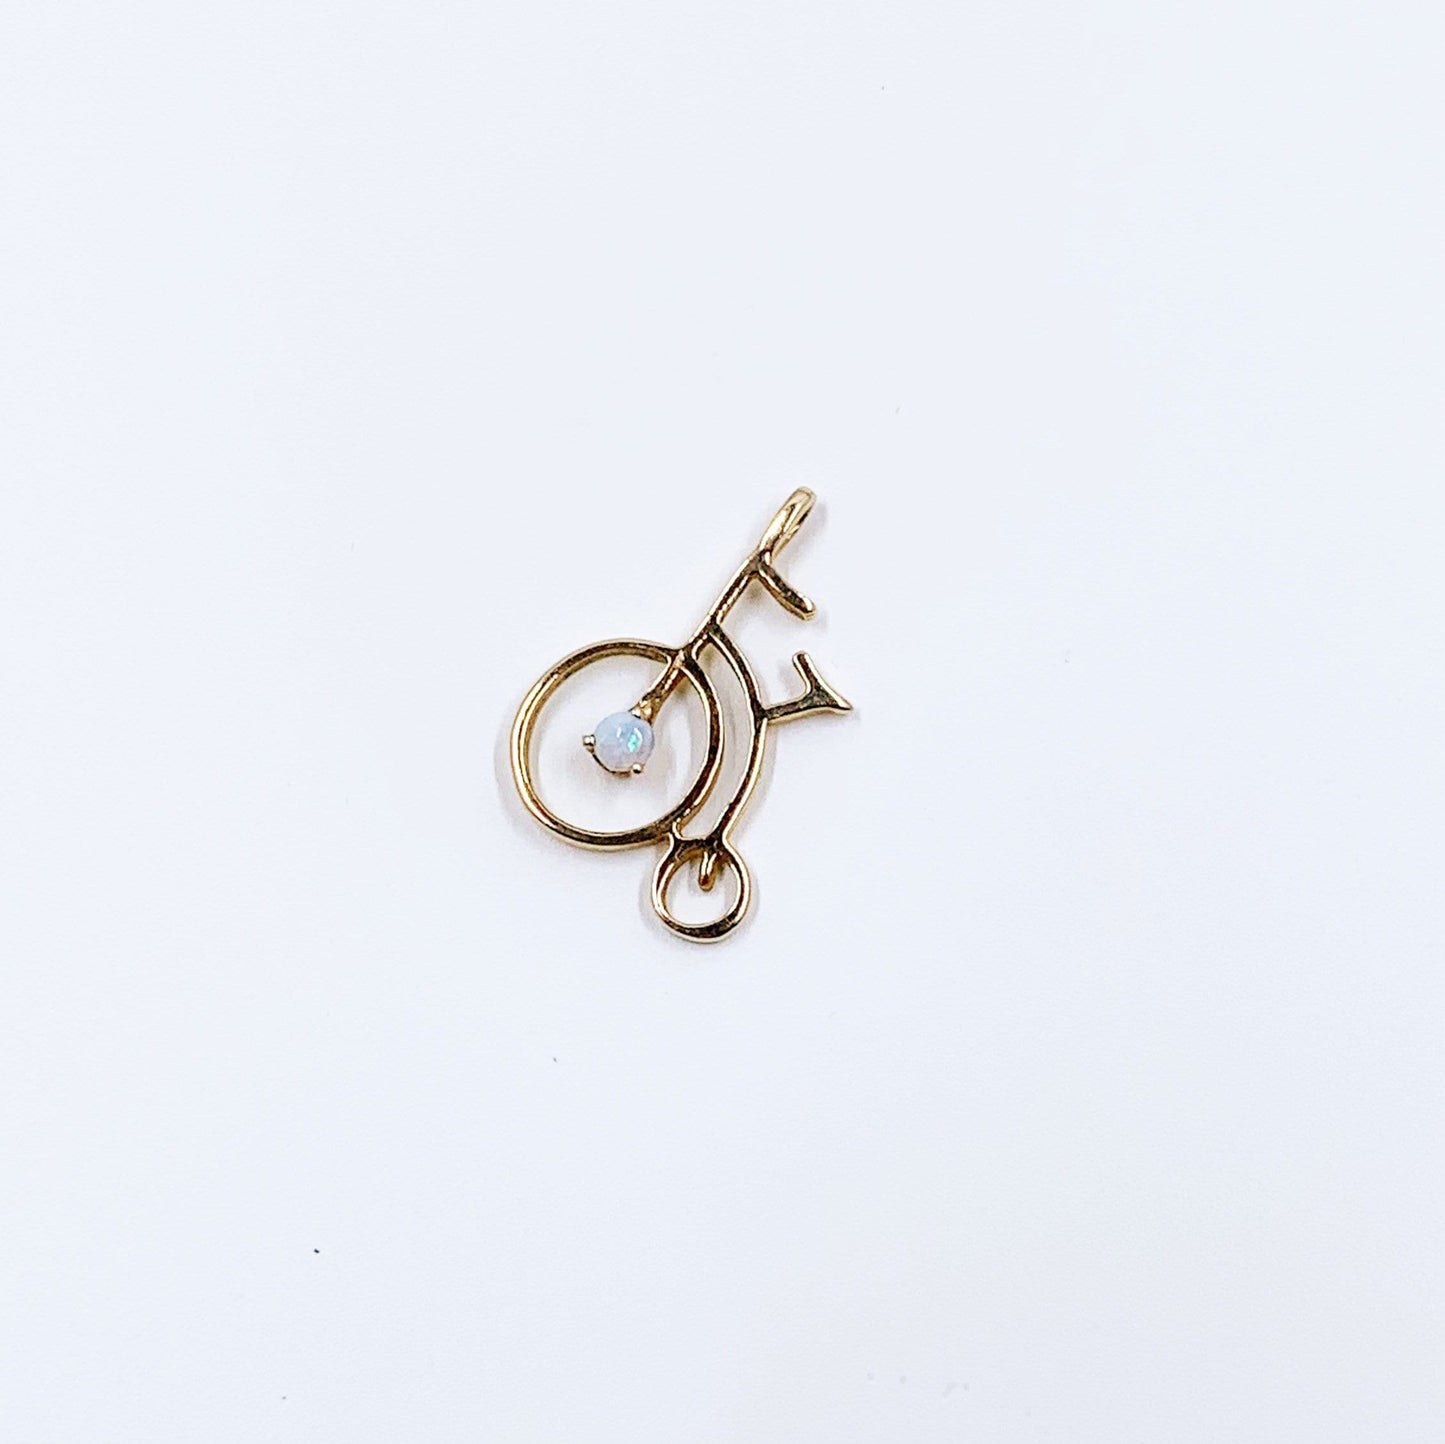 Vintage 10K Bicycle Opal Pendant | 10K Gold Penny Farthing Charm Pendant | Gold Bike Charm